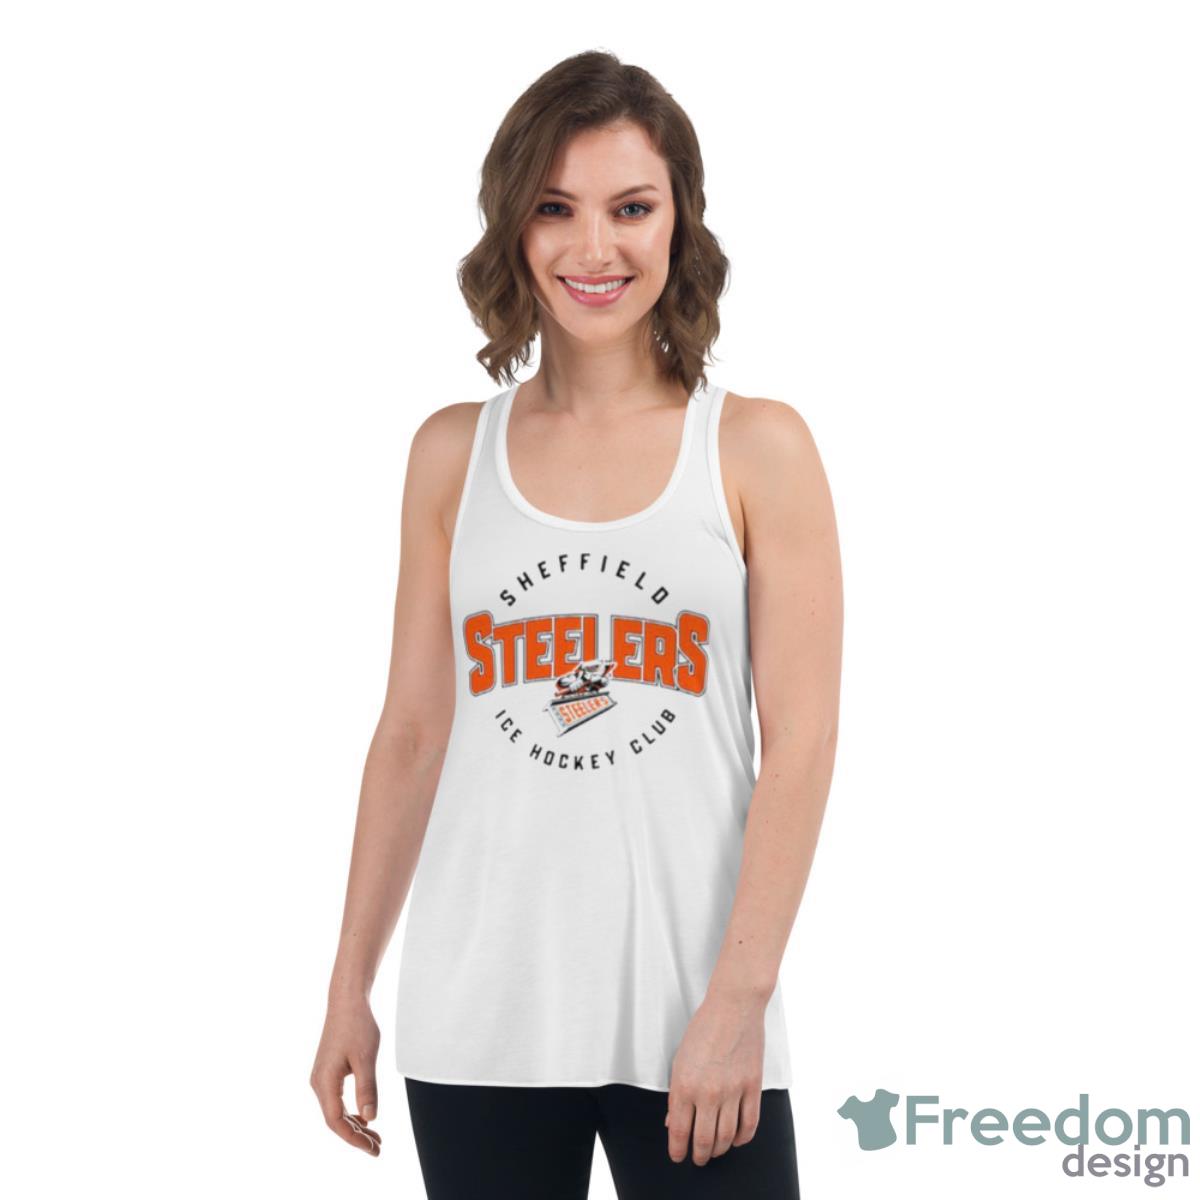 Sheffield Steelers Ice hockey club shirt - Freedomdesign